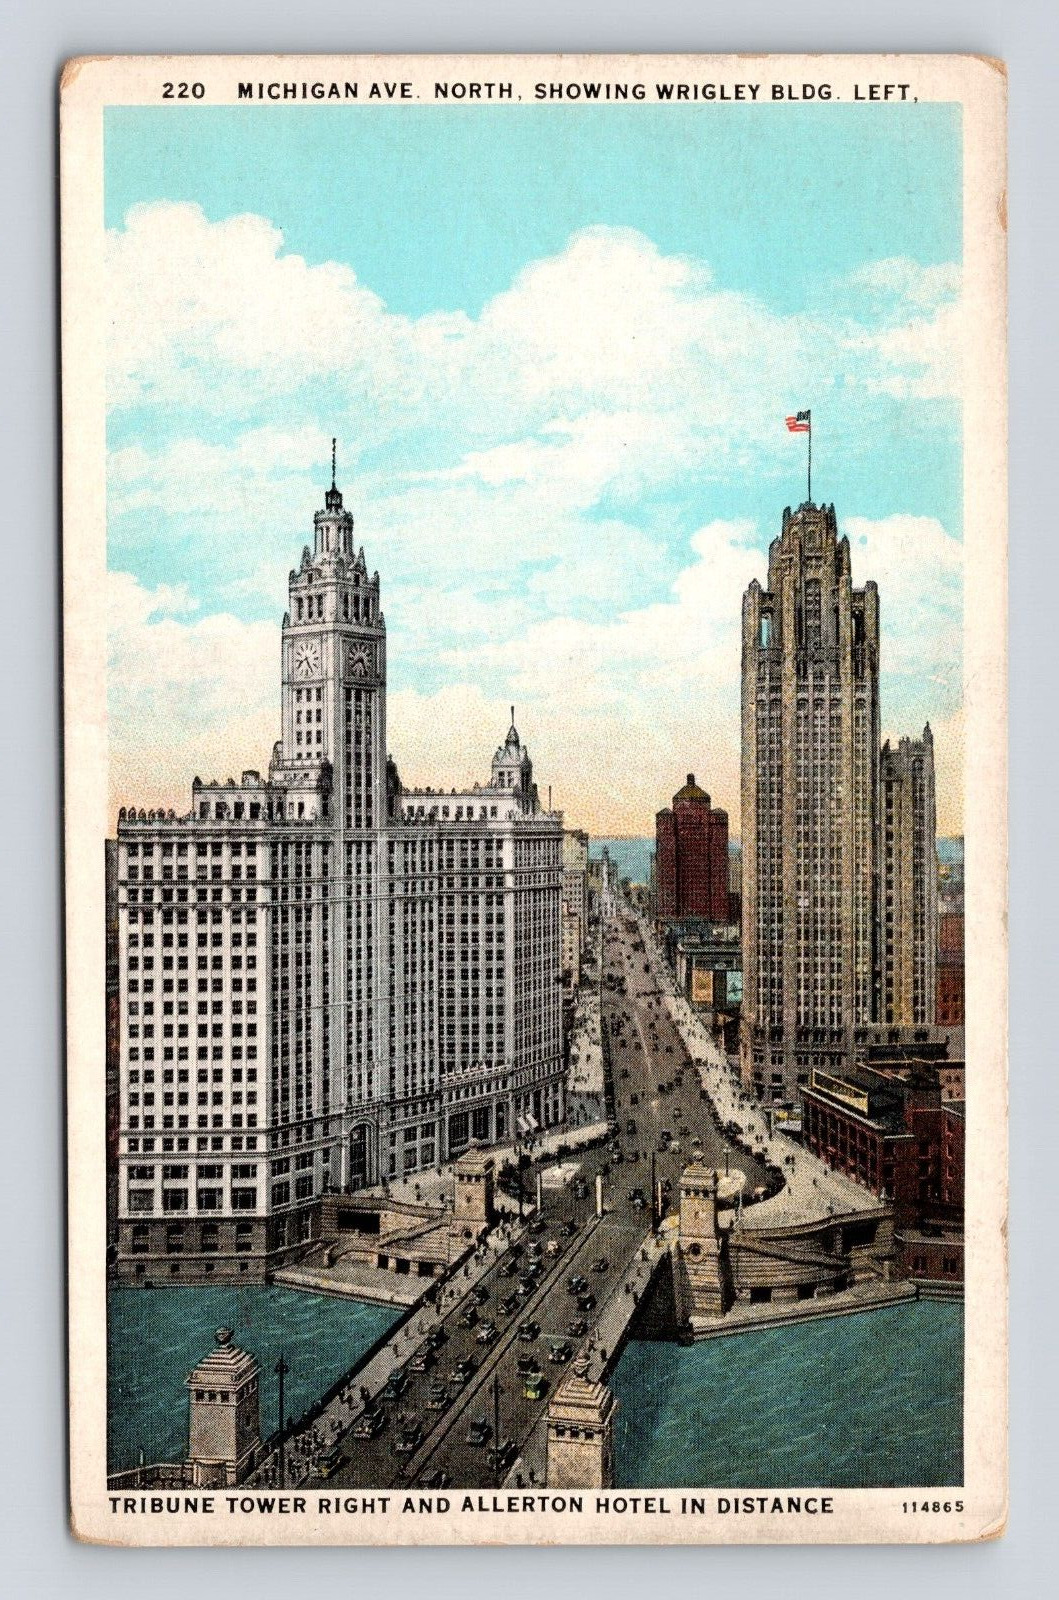 Antique Postcard MICHIGAN AVE WRIGLEY BLDG TRIBUNE TOWER ALLERTON HOTEL 1910-20